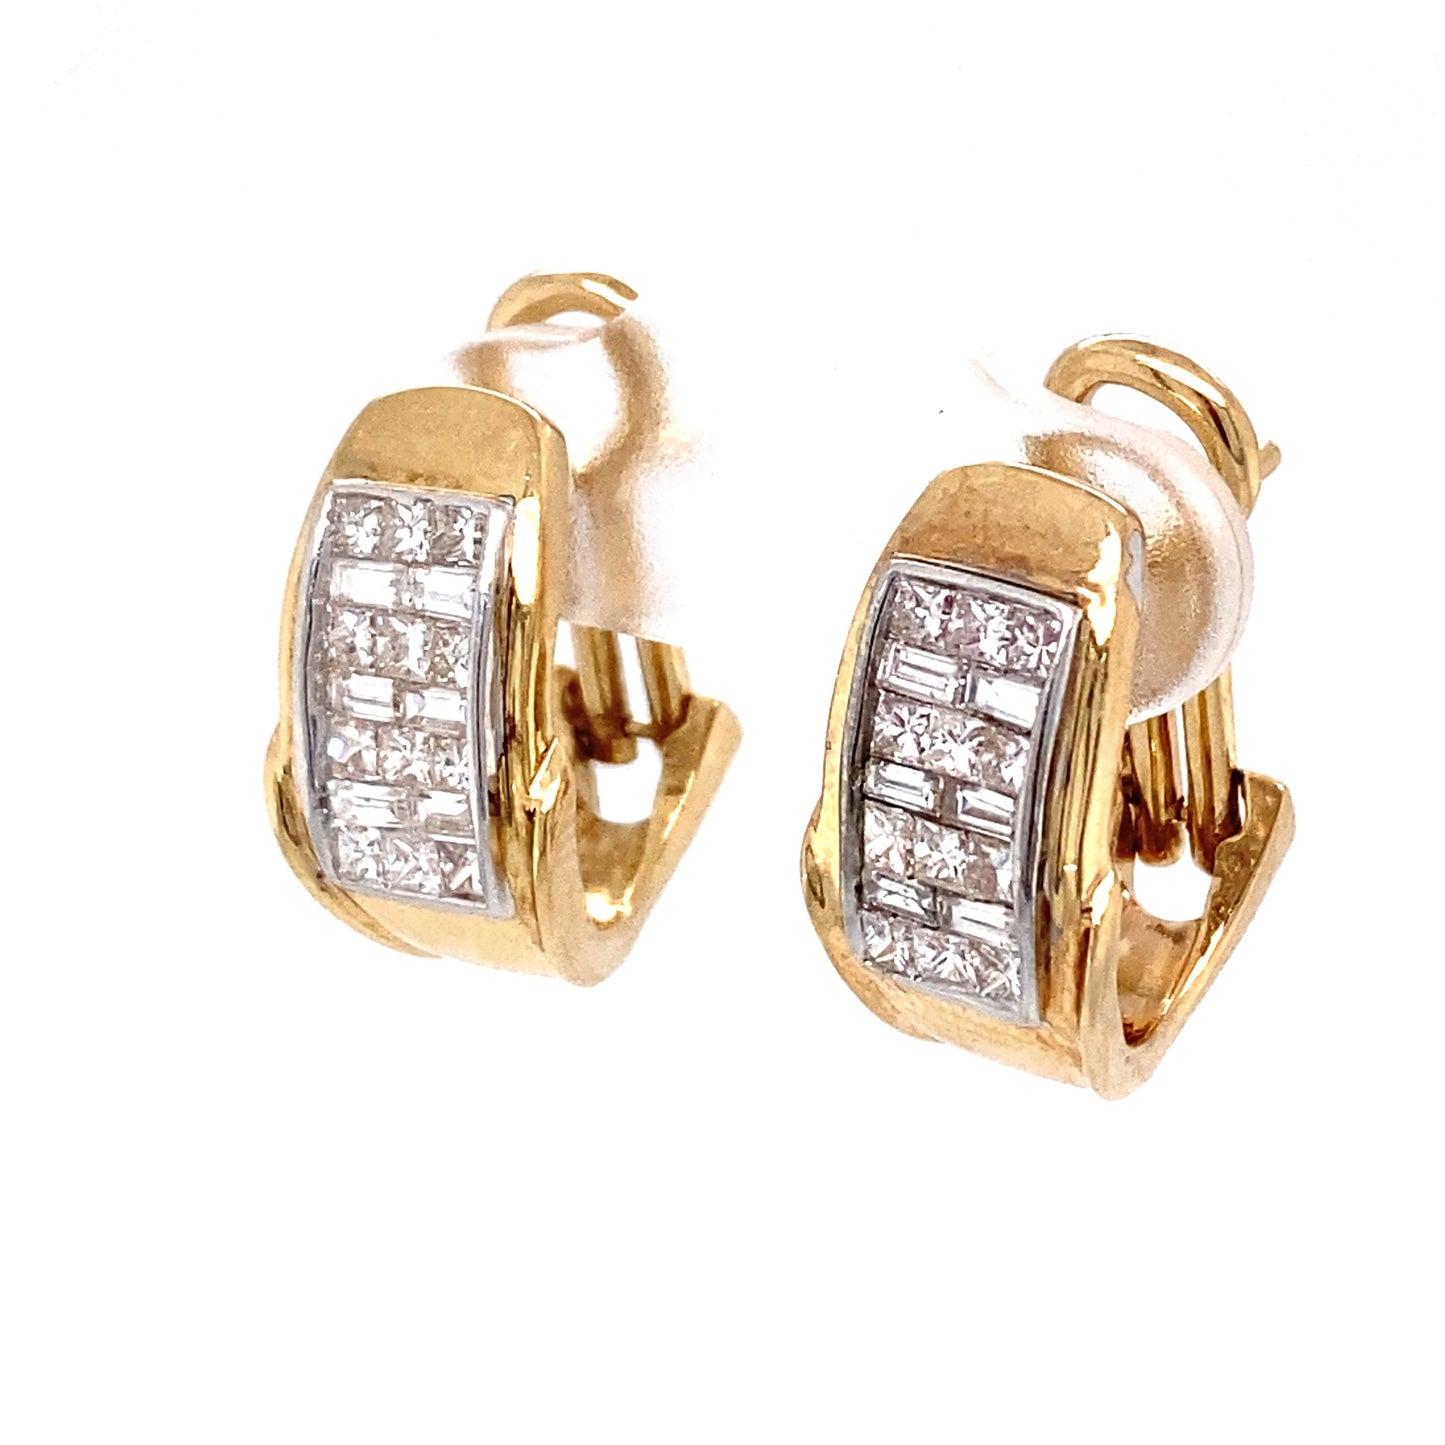 Circa 1980s Baguette and Princess Cut Diamond Earrings in 14K Gold